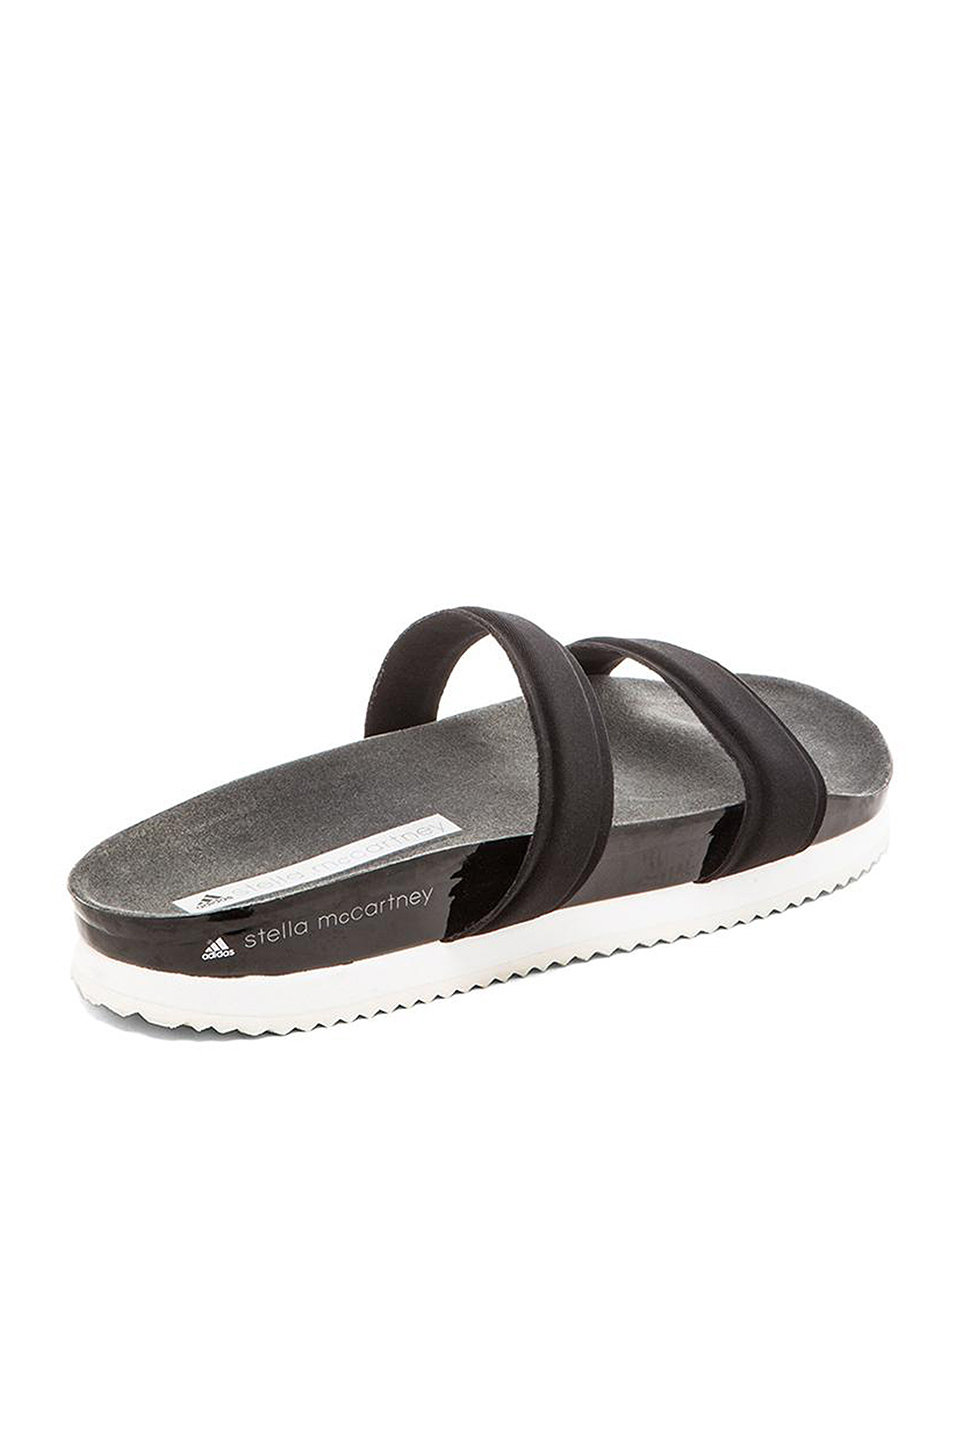 Lyst - Adidas By Stella Mccartney Slide Sandals in Black